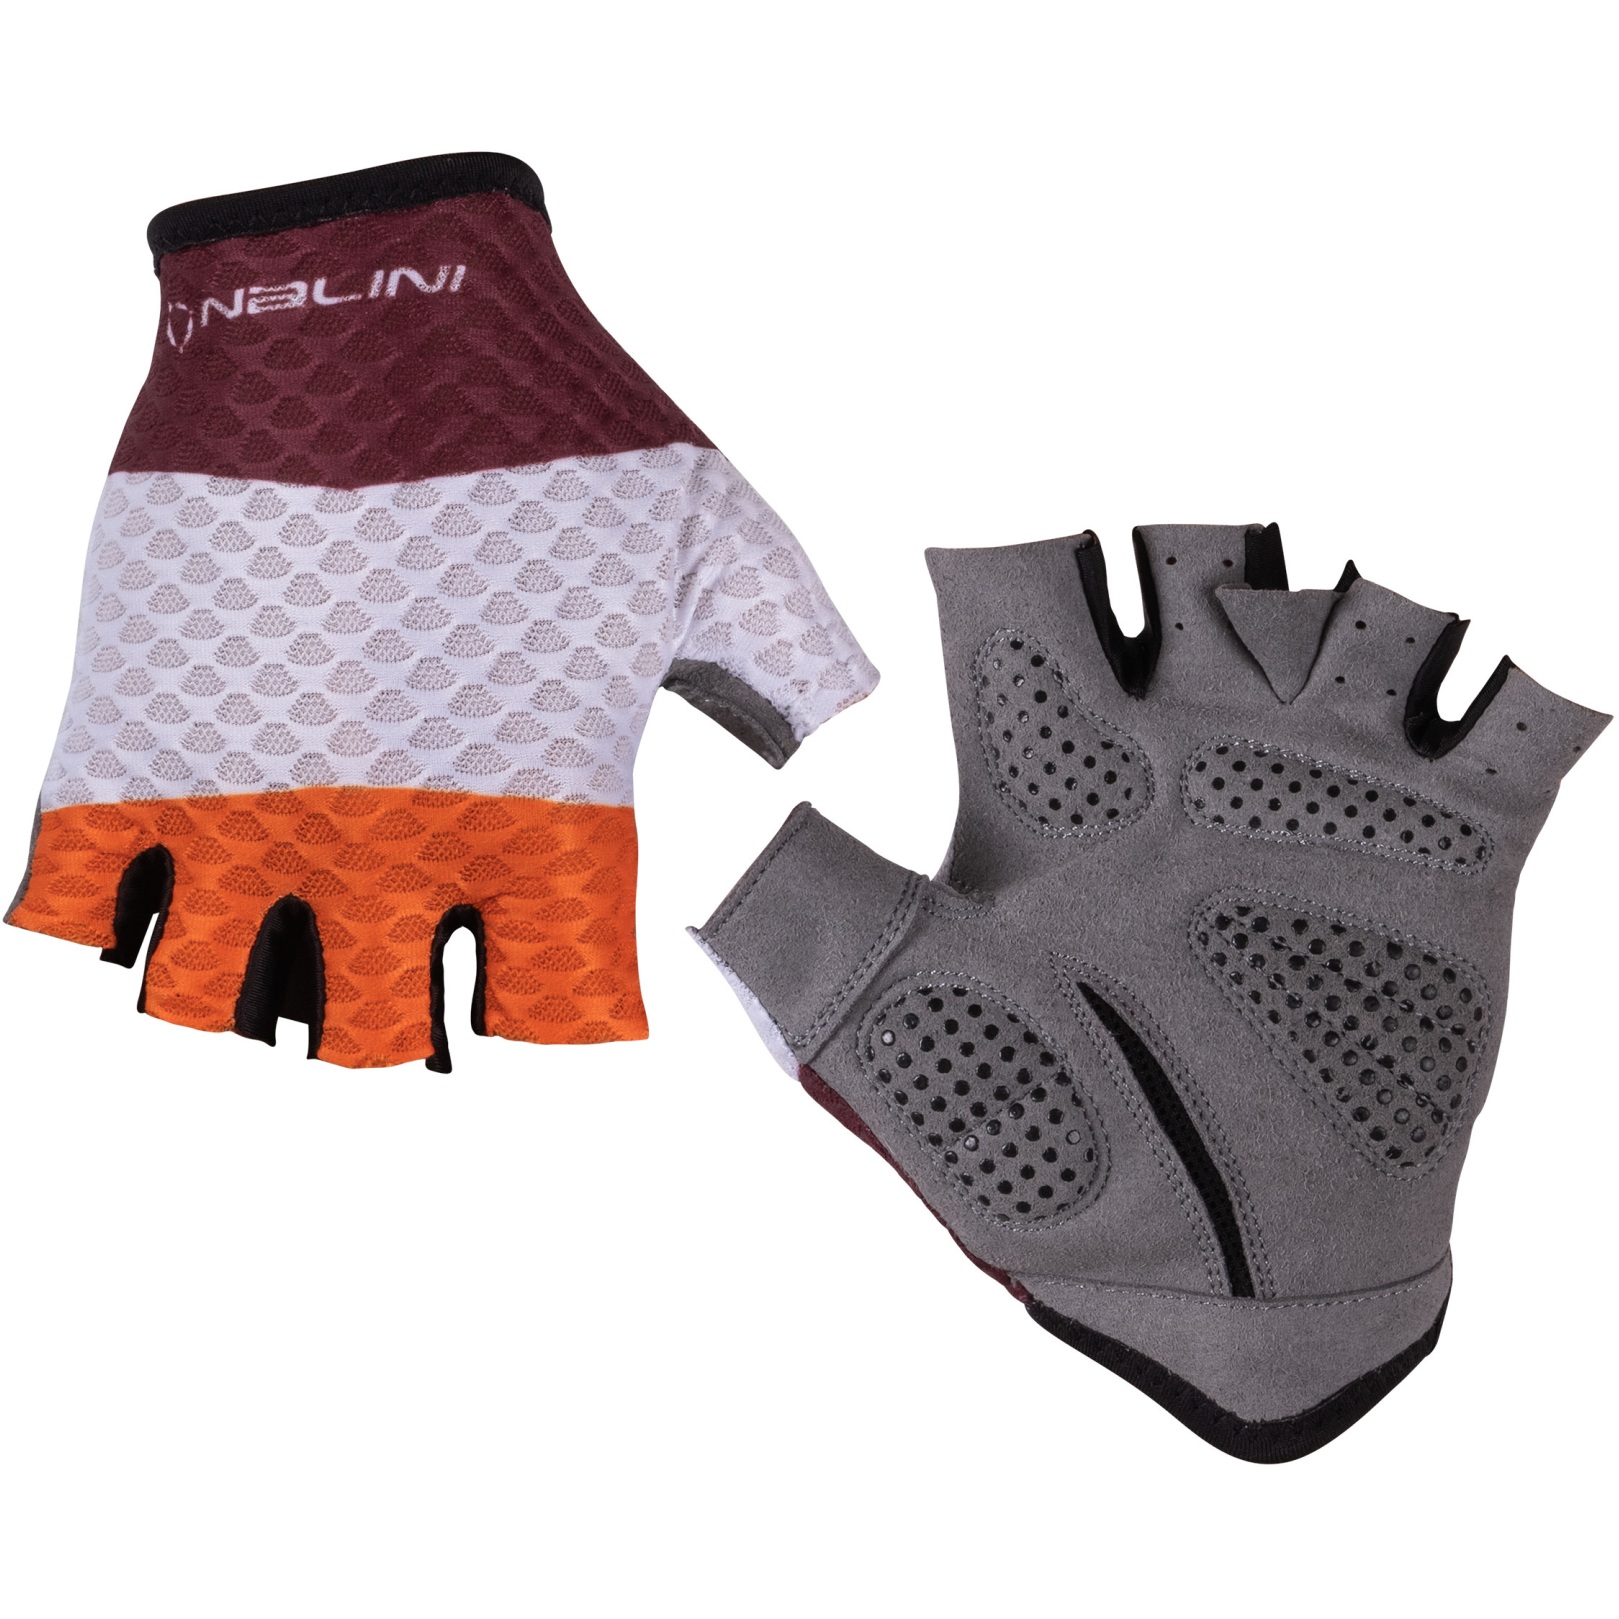 Nalini New Summer Cycling Gloves - red wine/orange 4100